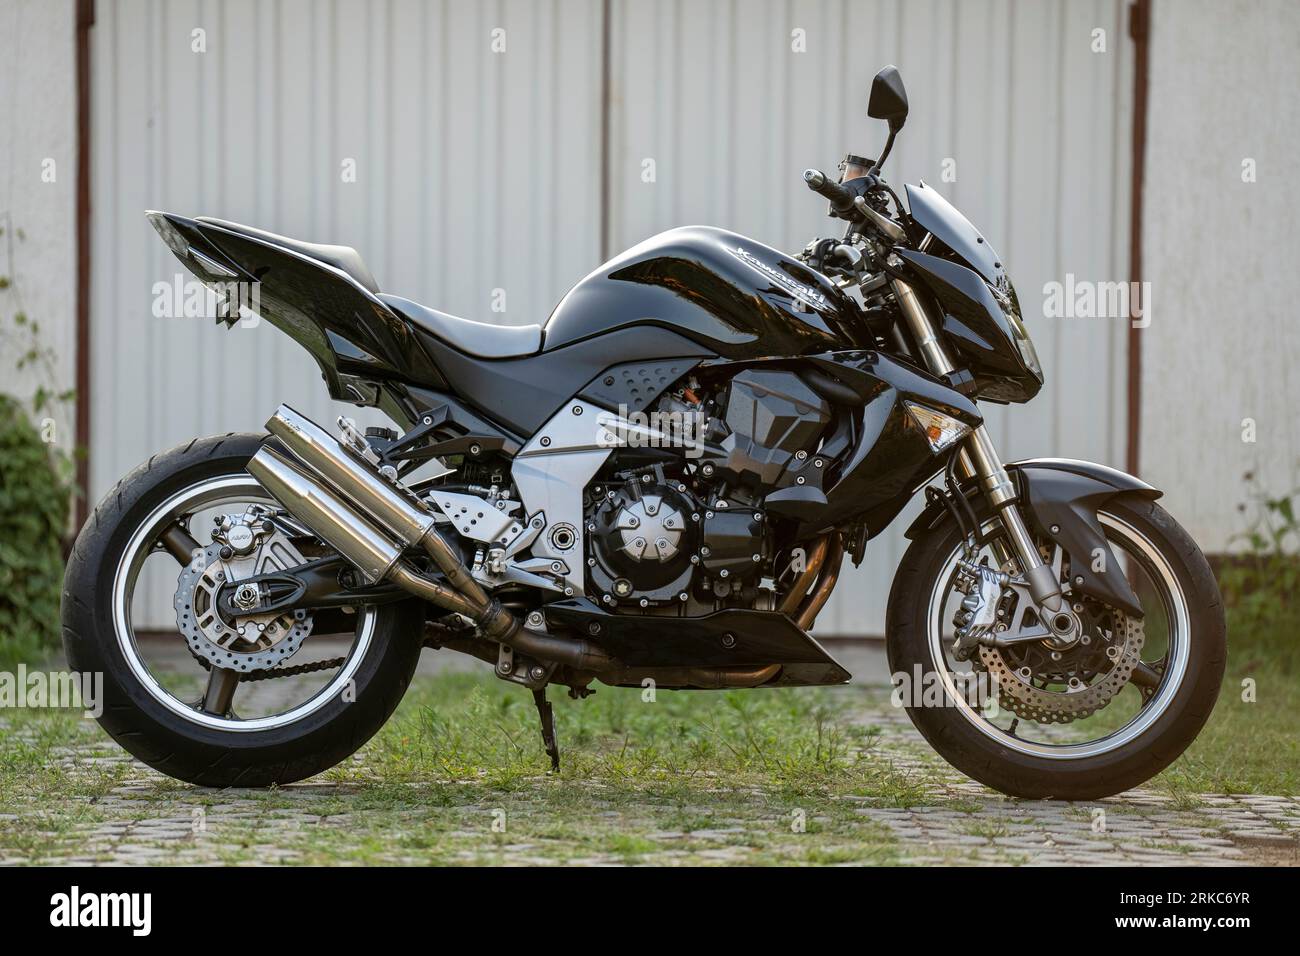 Kawasaki motorcycle engine hi-res stock photography and images - Page 2 -  Alamy